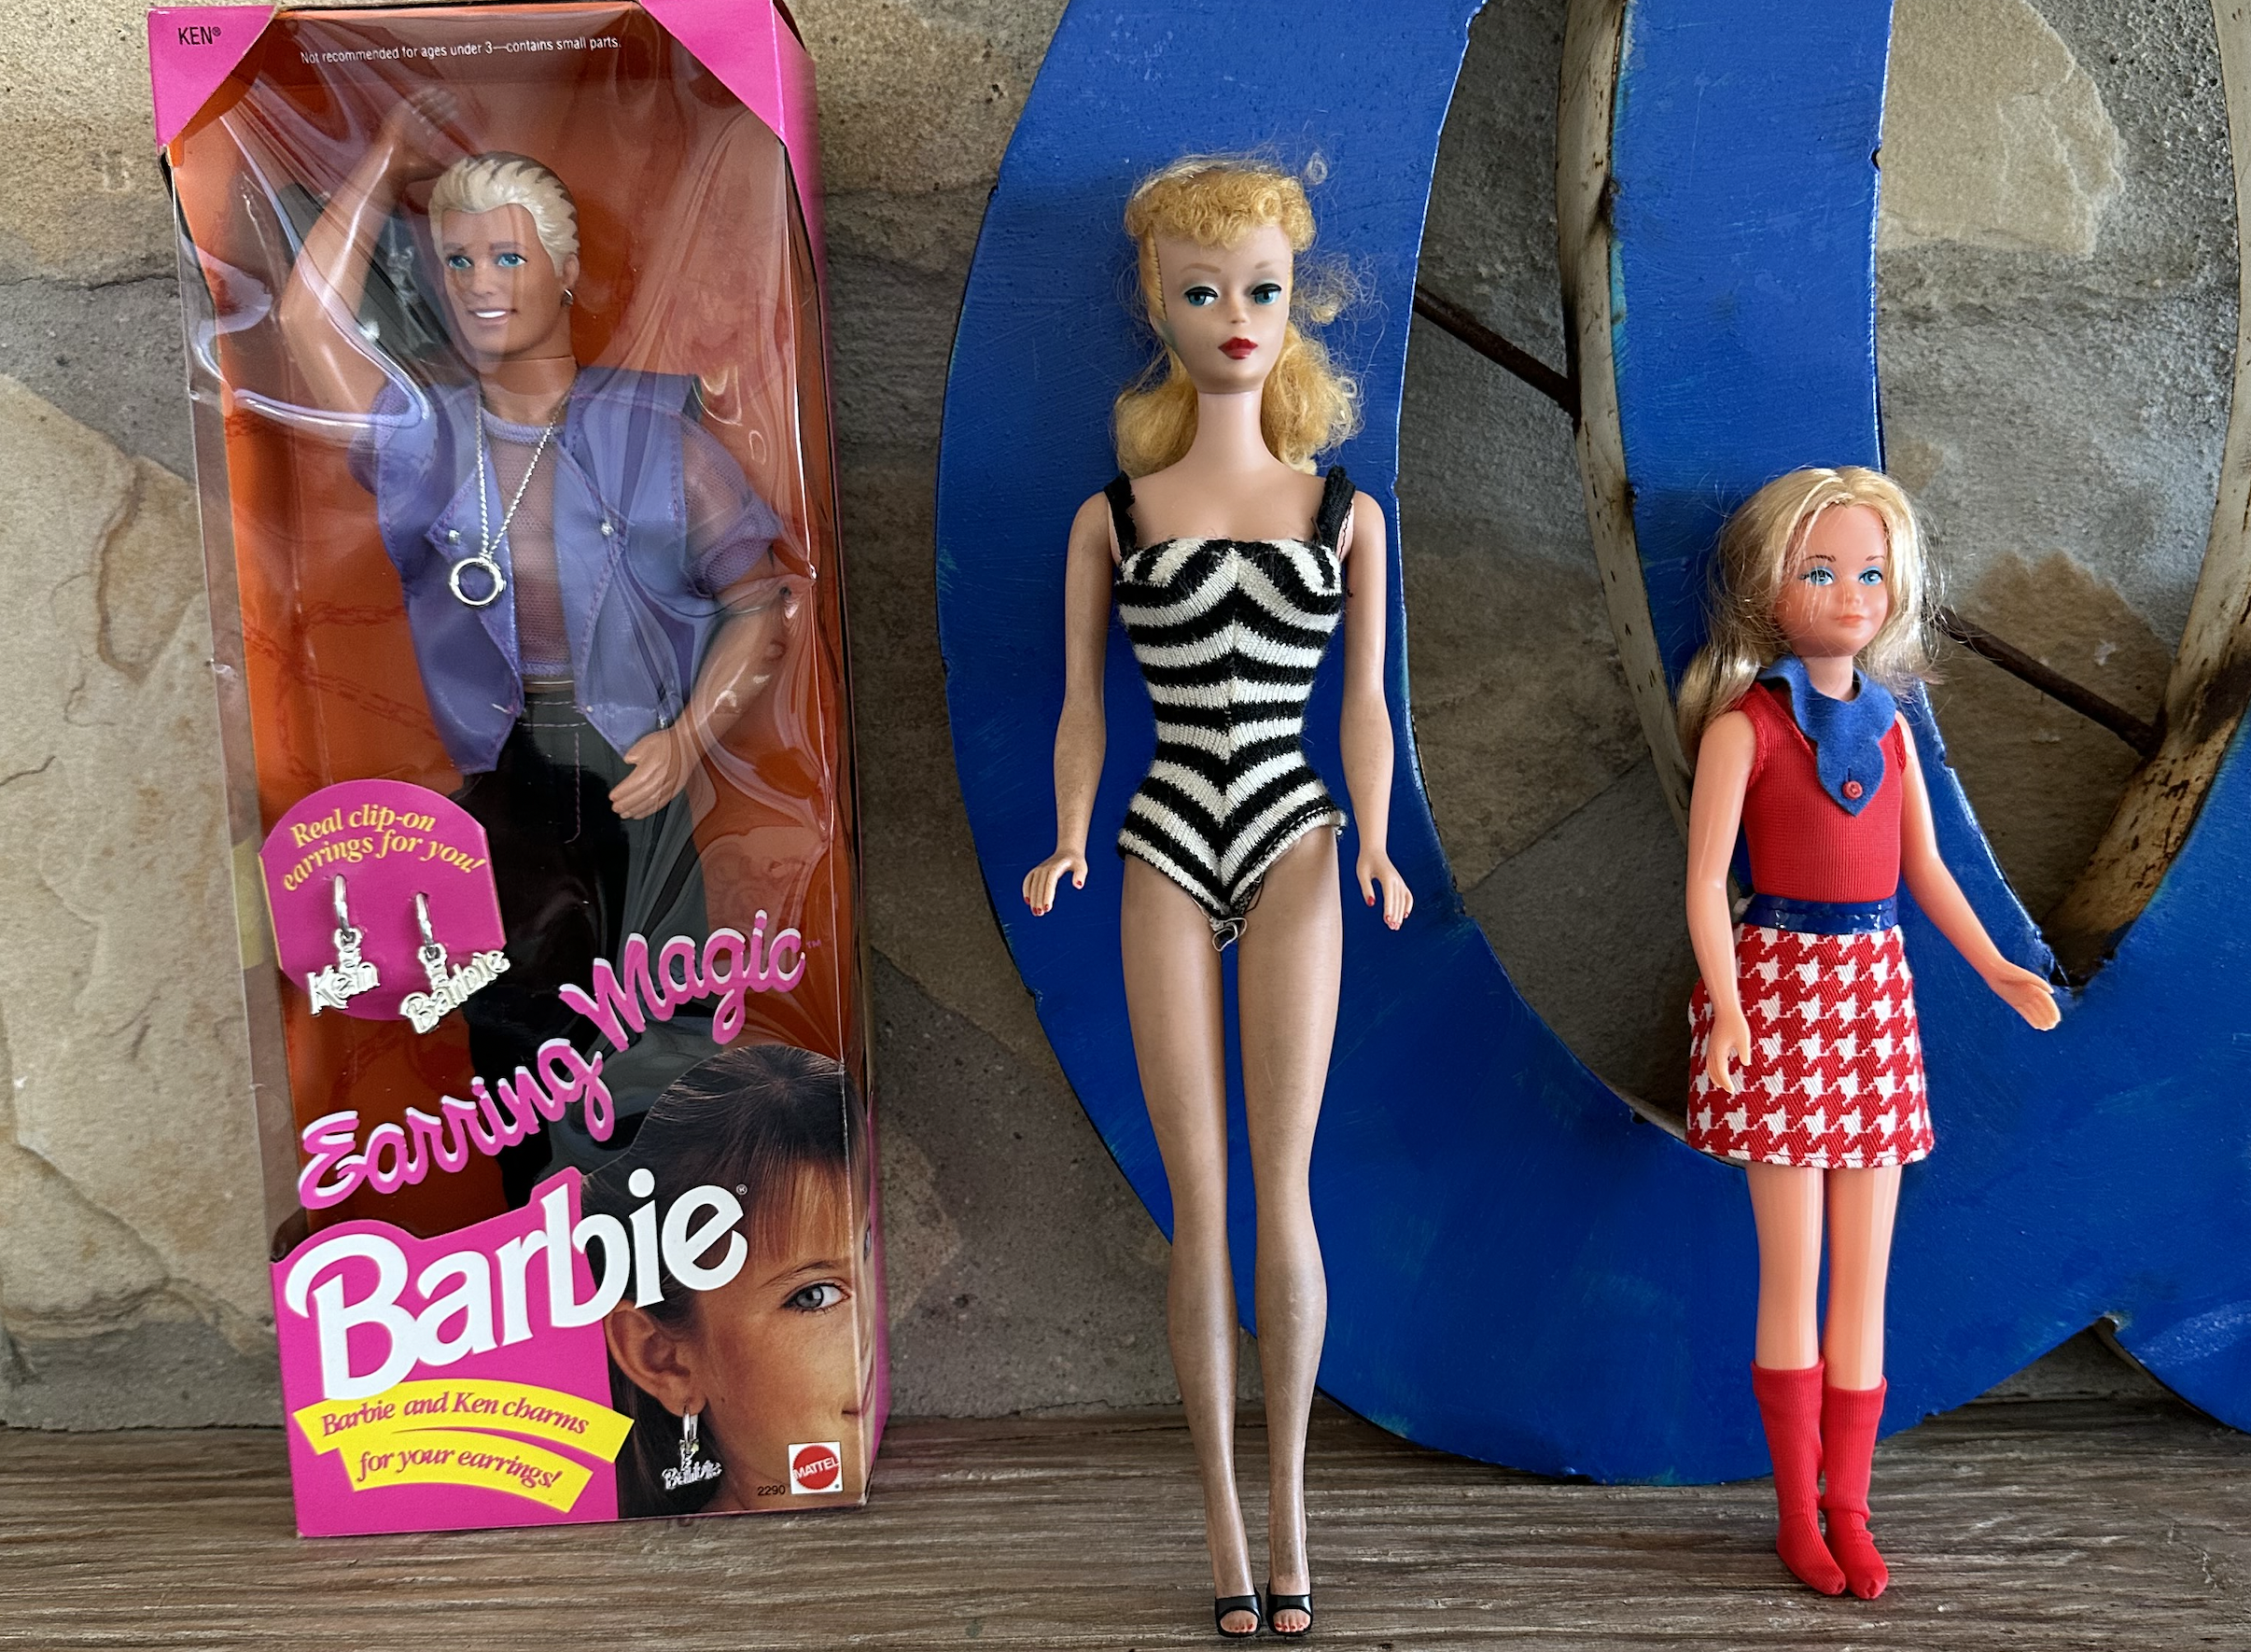 Best of Human barbie sex tape